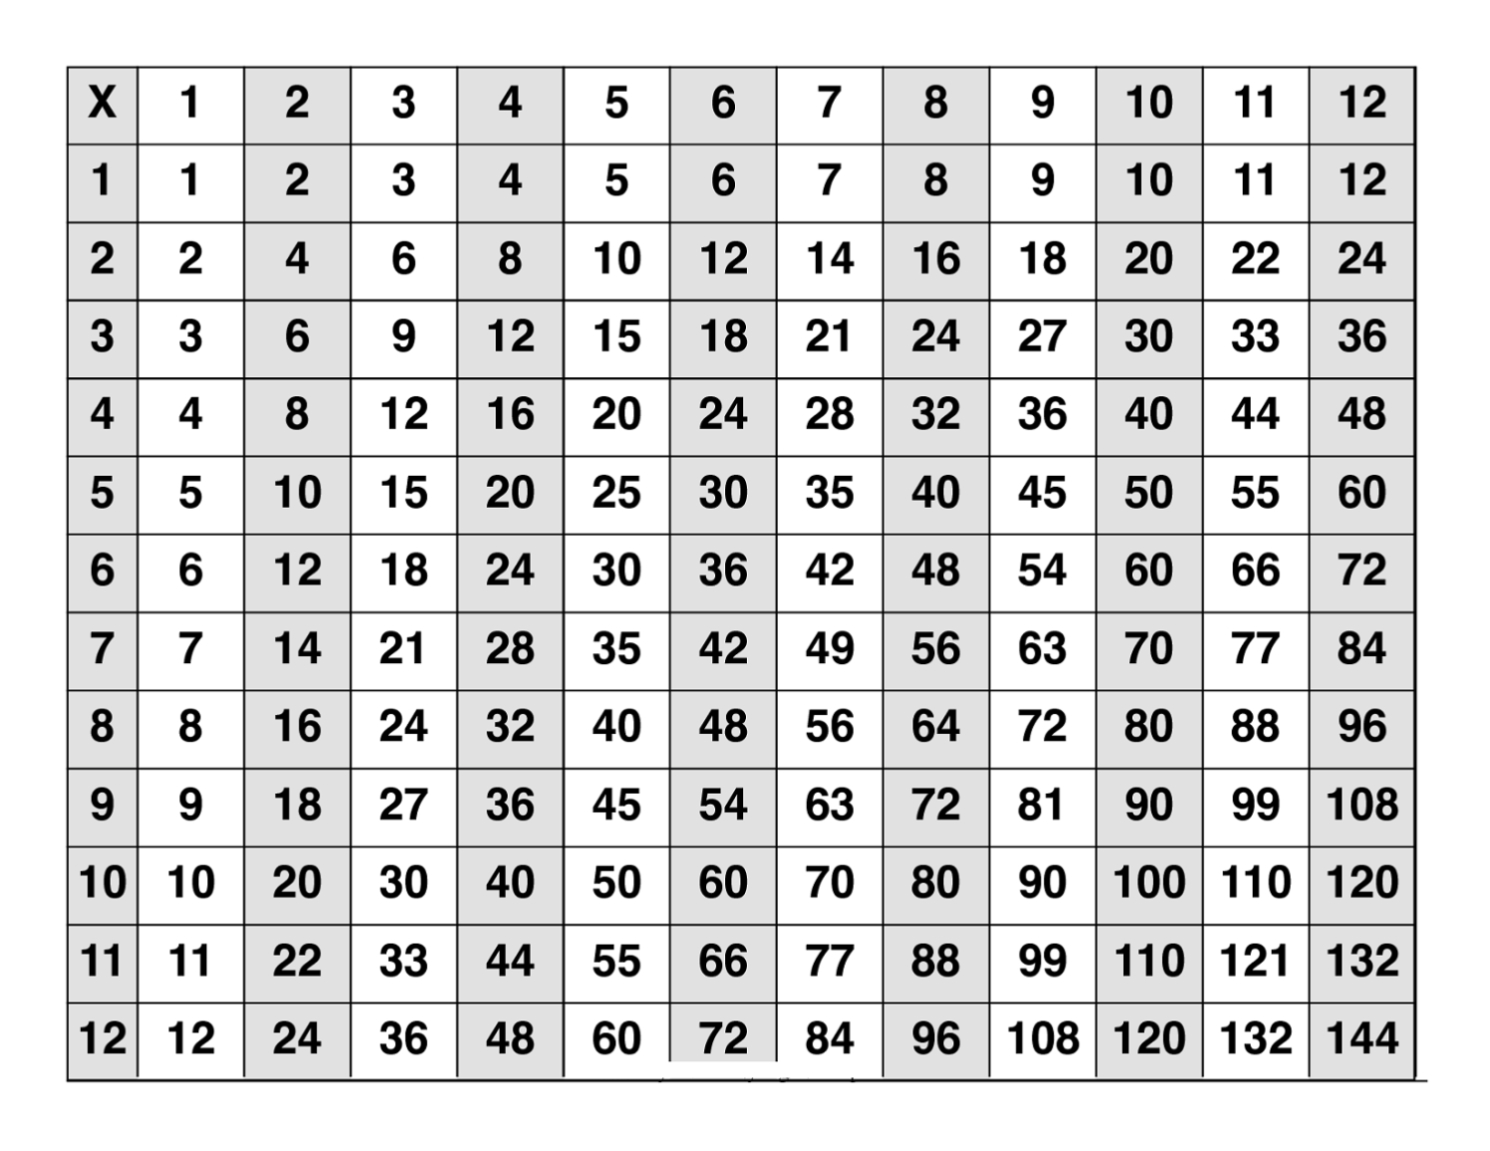 multiplication table to 12 printable